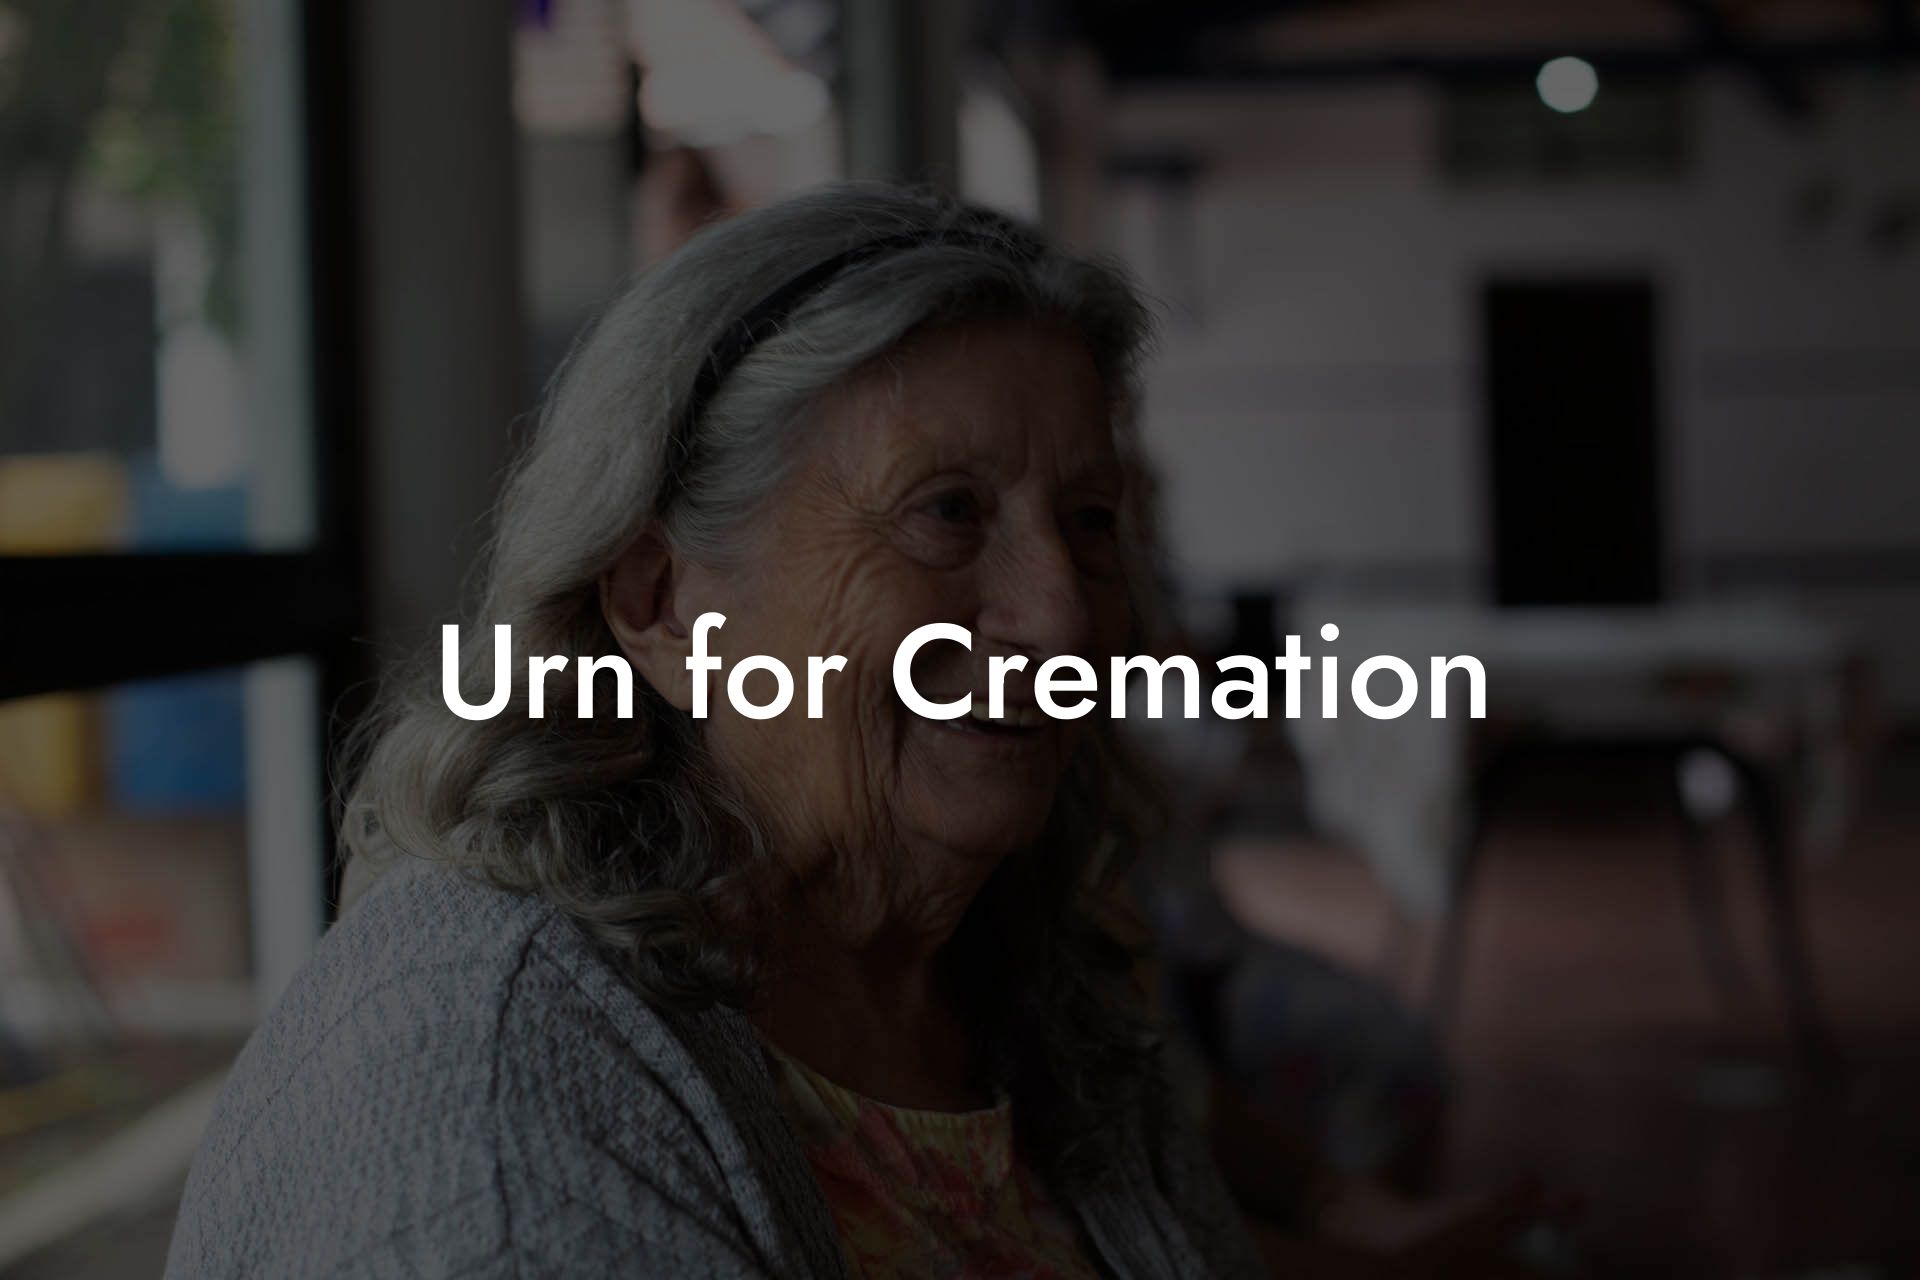 Urn for Cremation